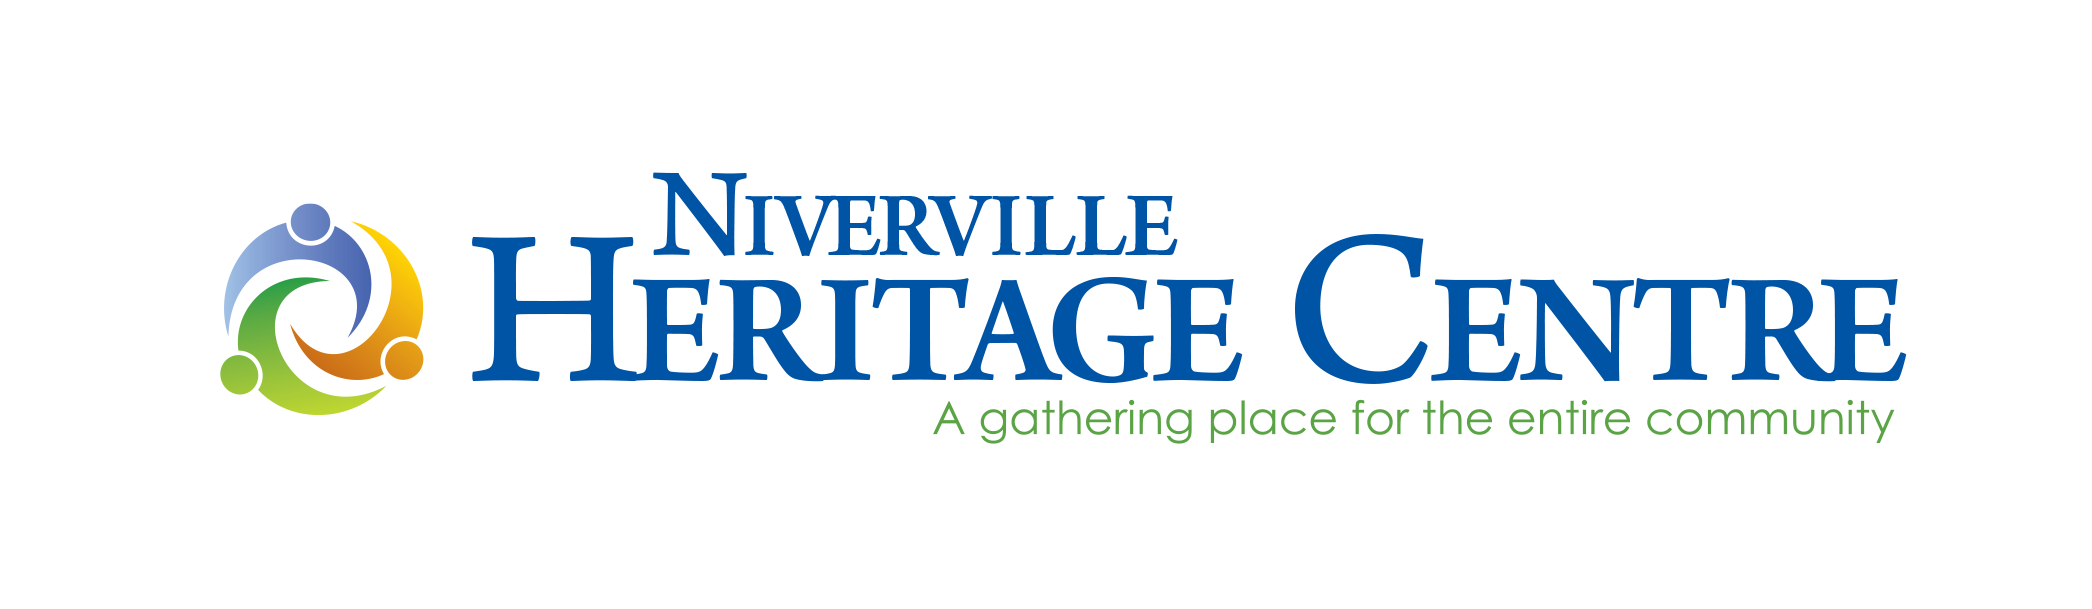 Niverville Heritage Centre Logo